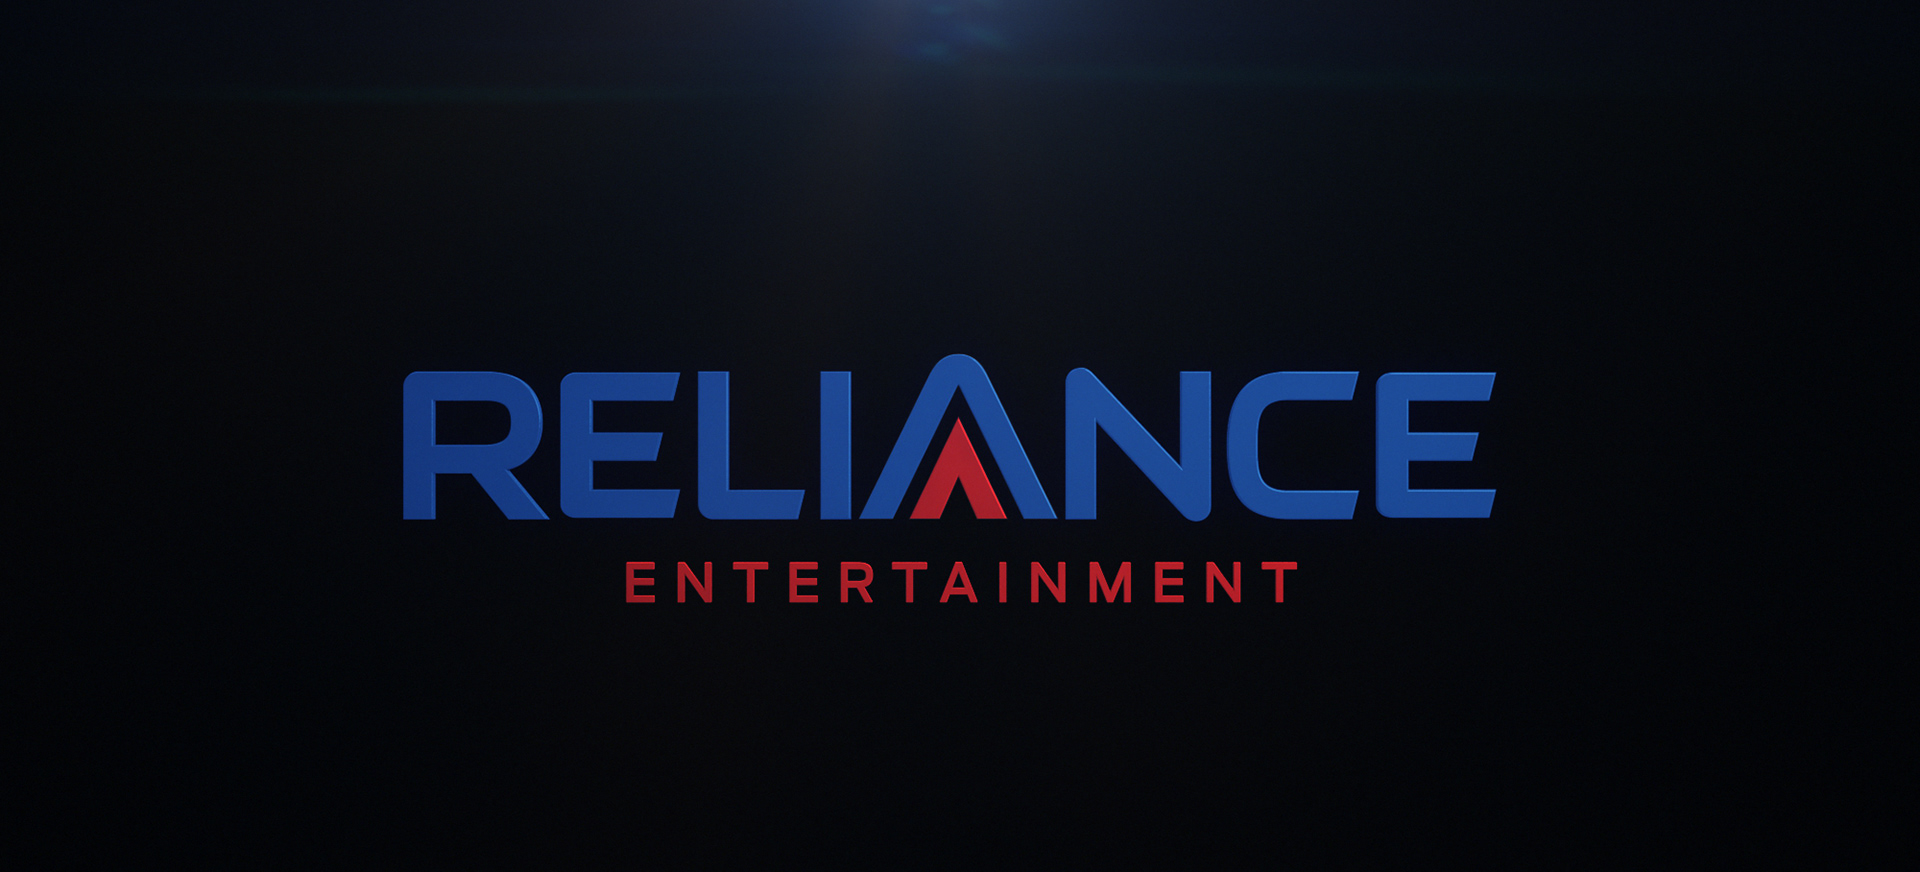 reliance entertainment on behance